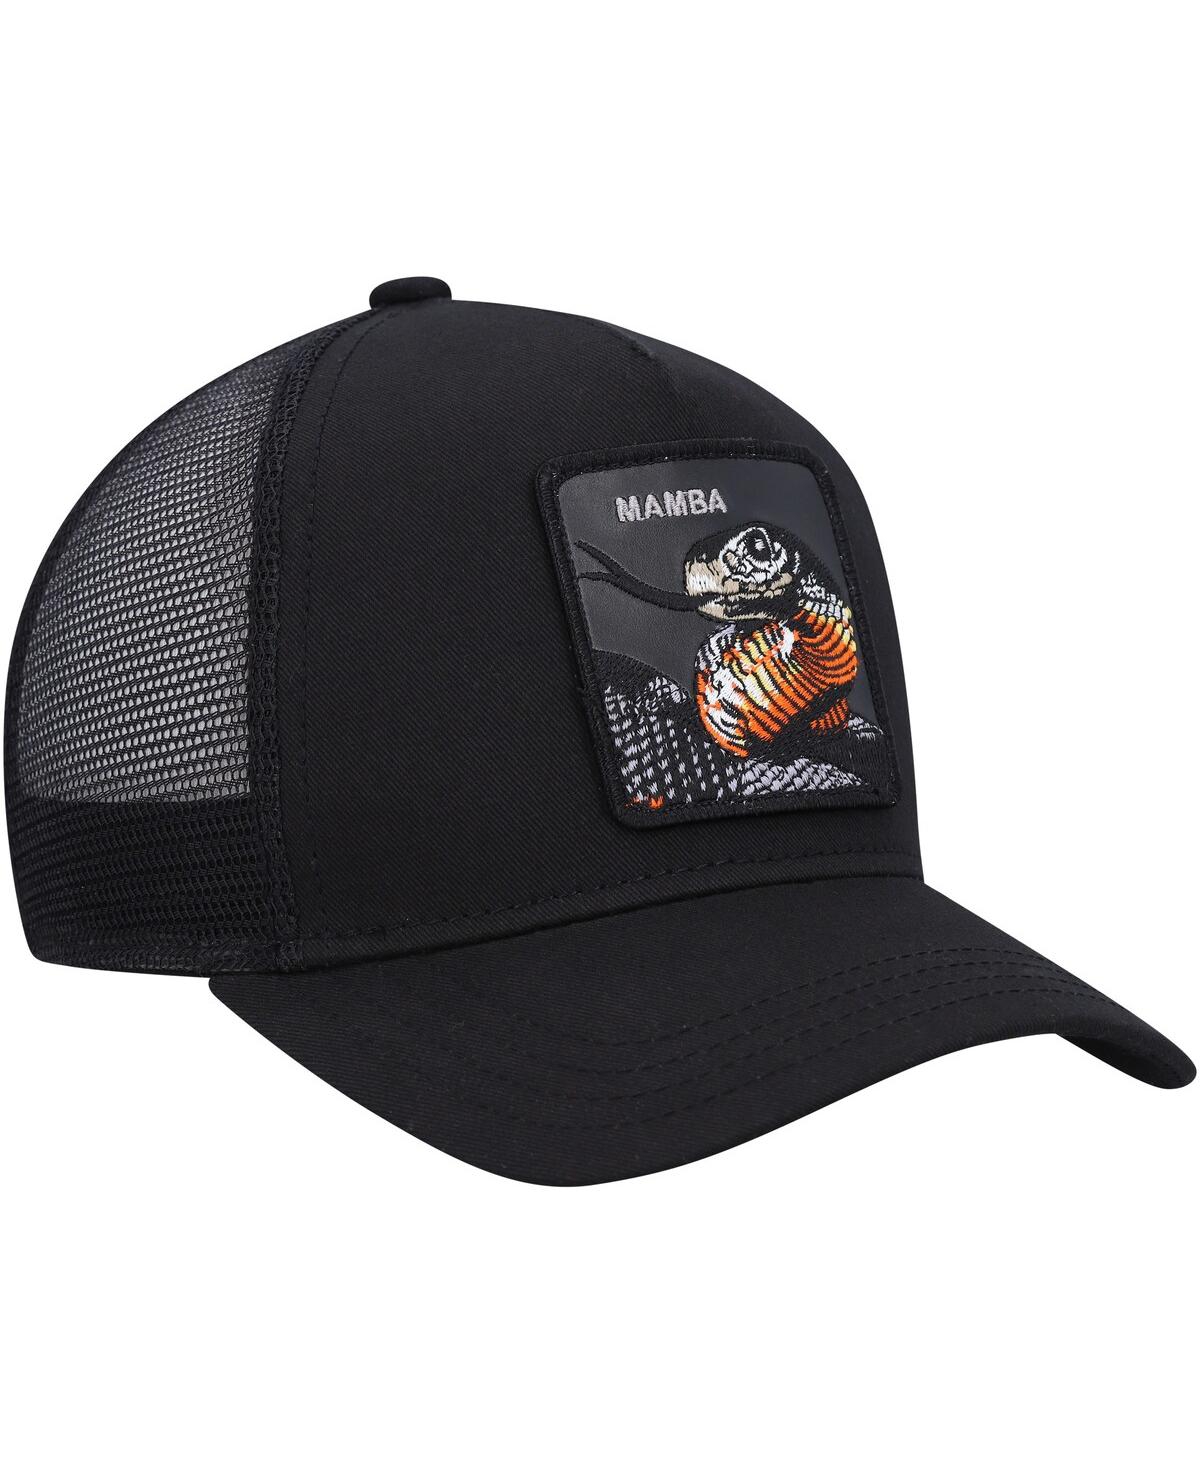 Shop Goorin Bros Men's . Black Mamba Adjustable Trucker Hat